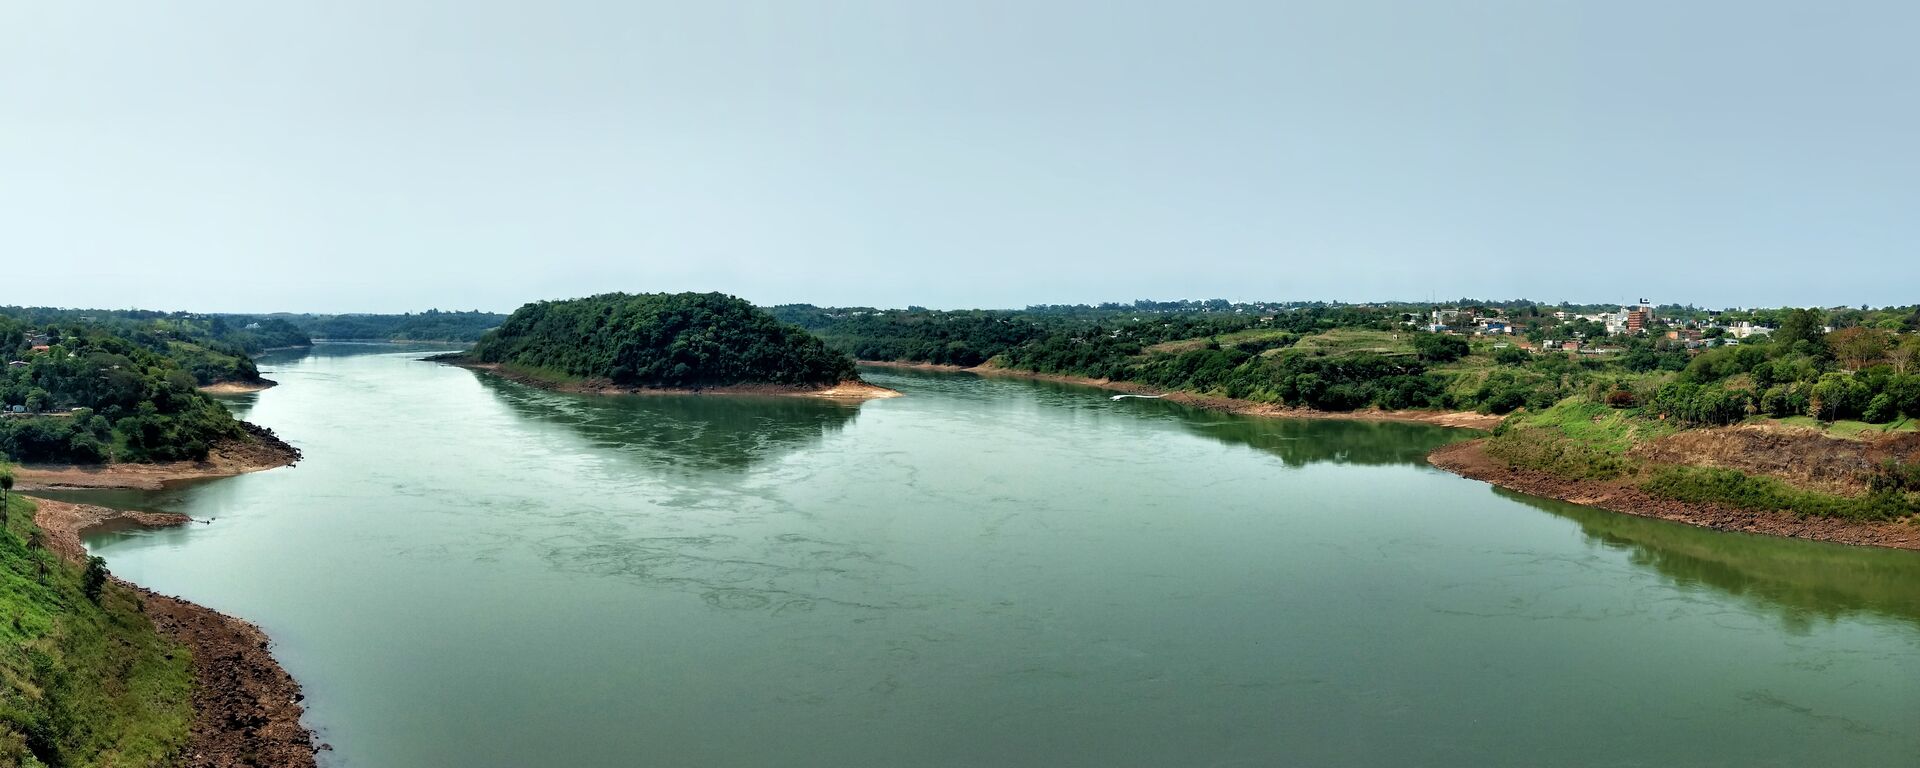 El río Paraná - Sputnik Mundo, 1920, 31.08.2021